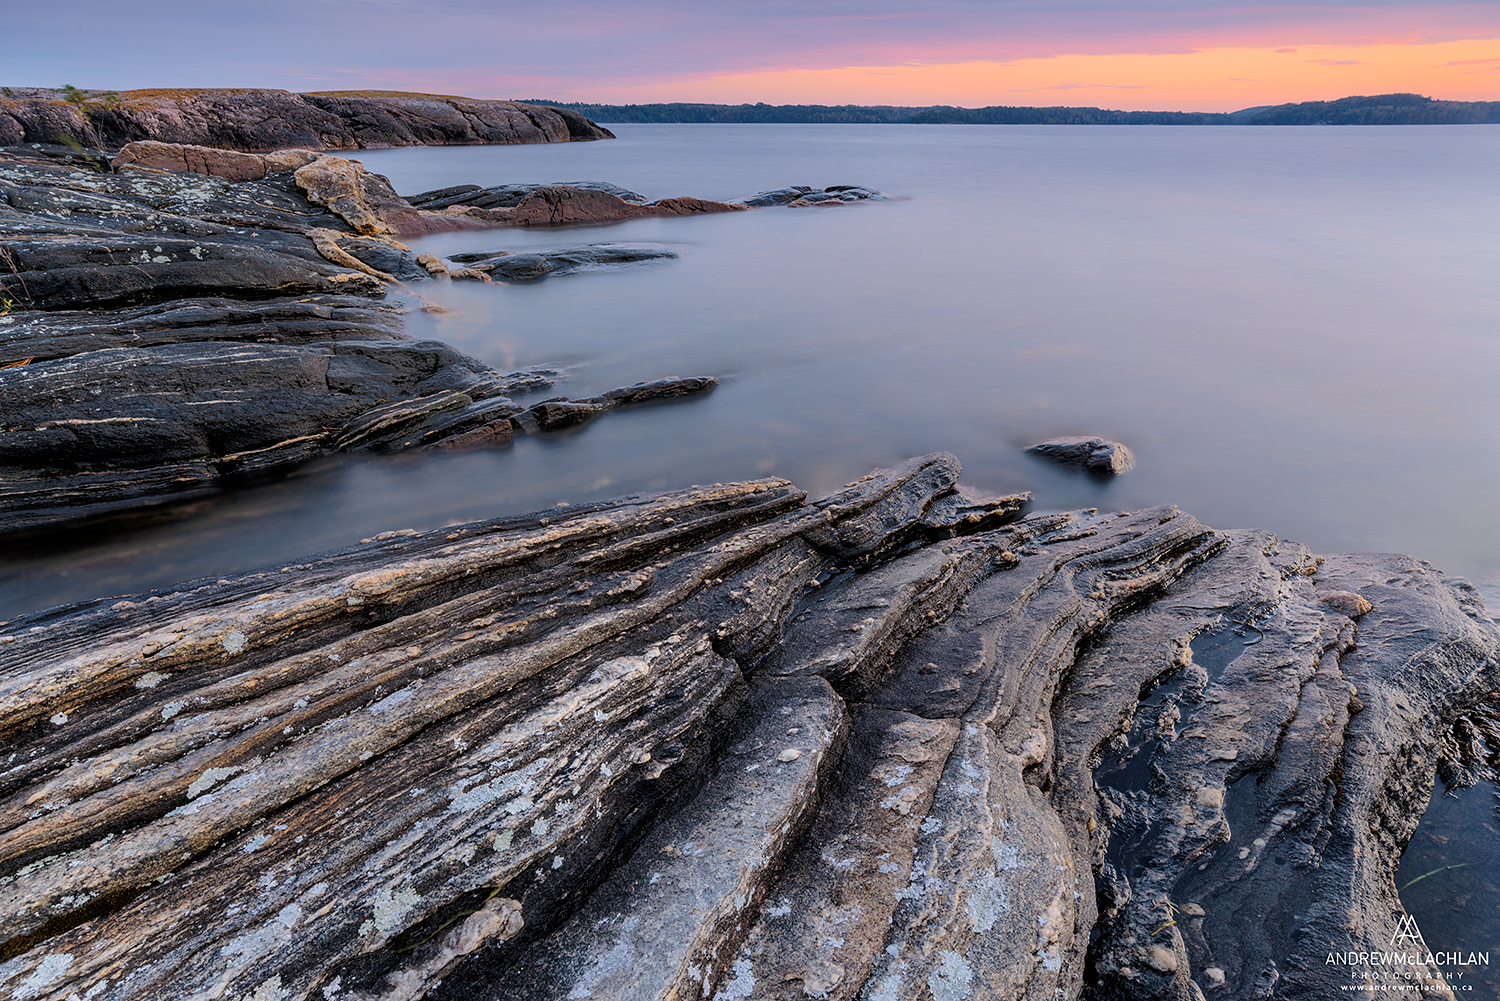 Sunset on Georgian Bay, Parry SOund, Ontario, Canada